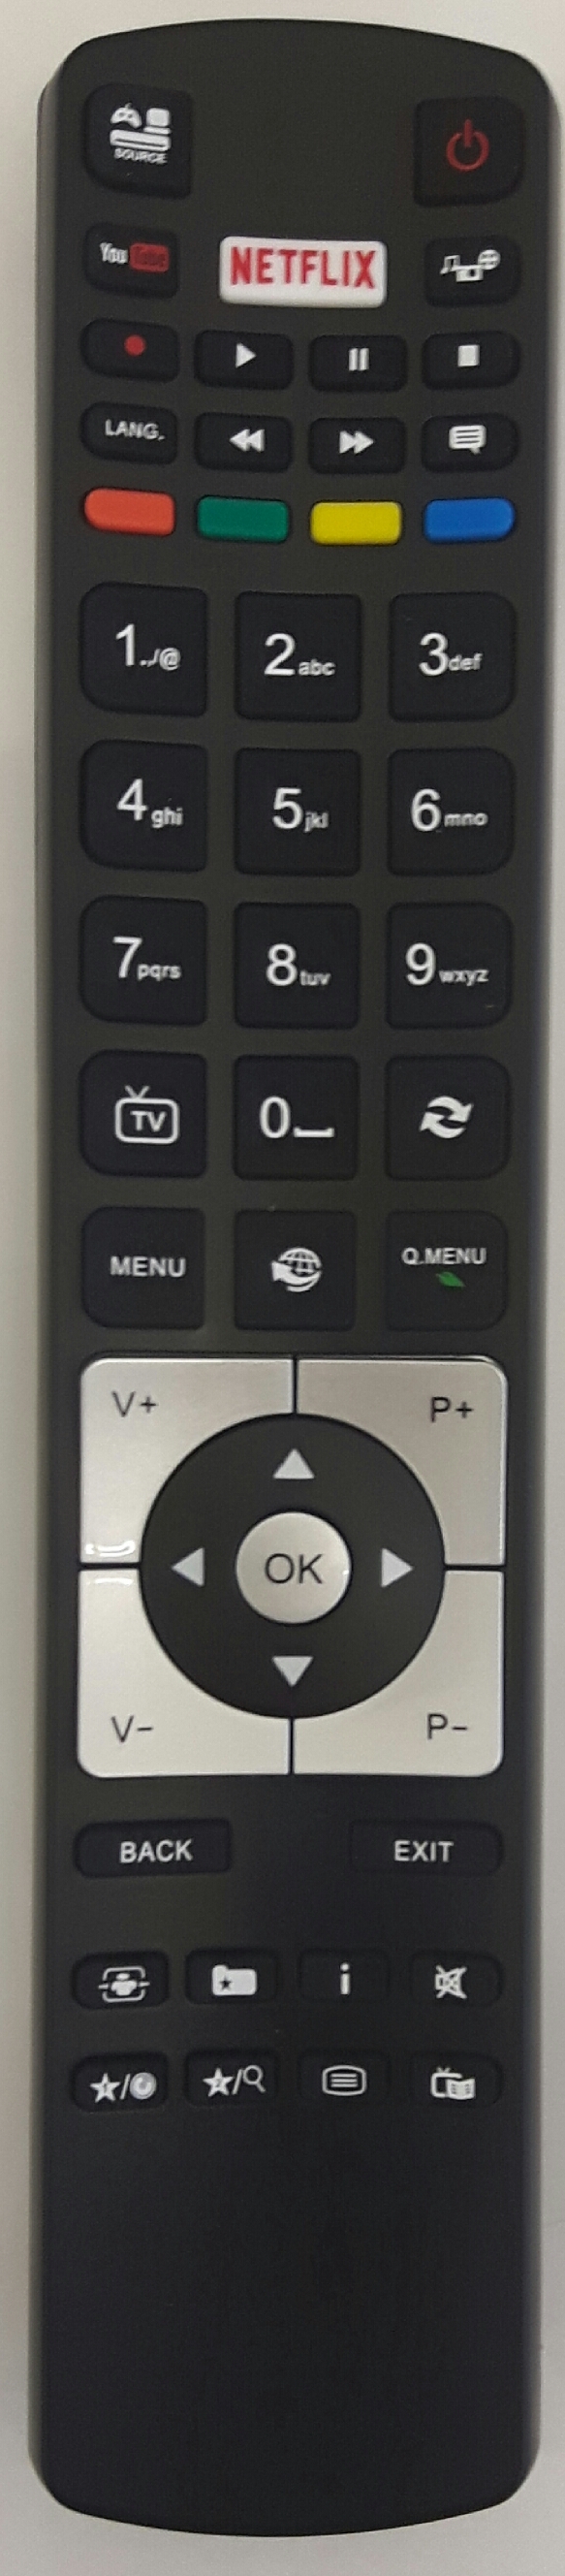 FINLUX RC5117 Remote Control Original